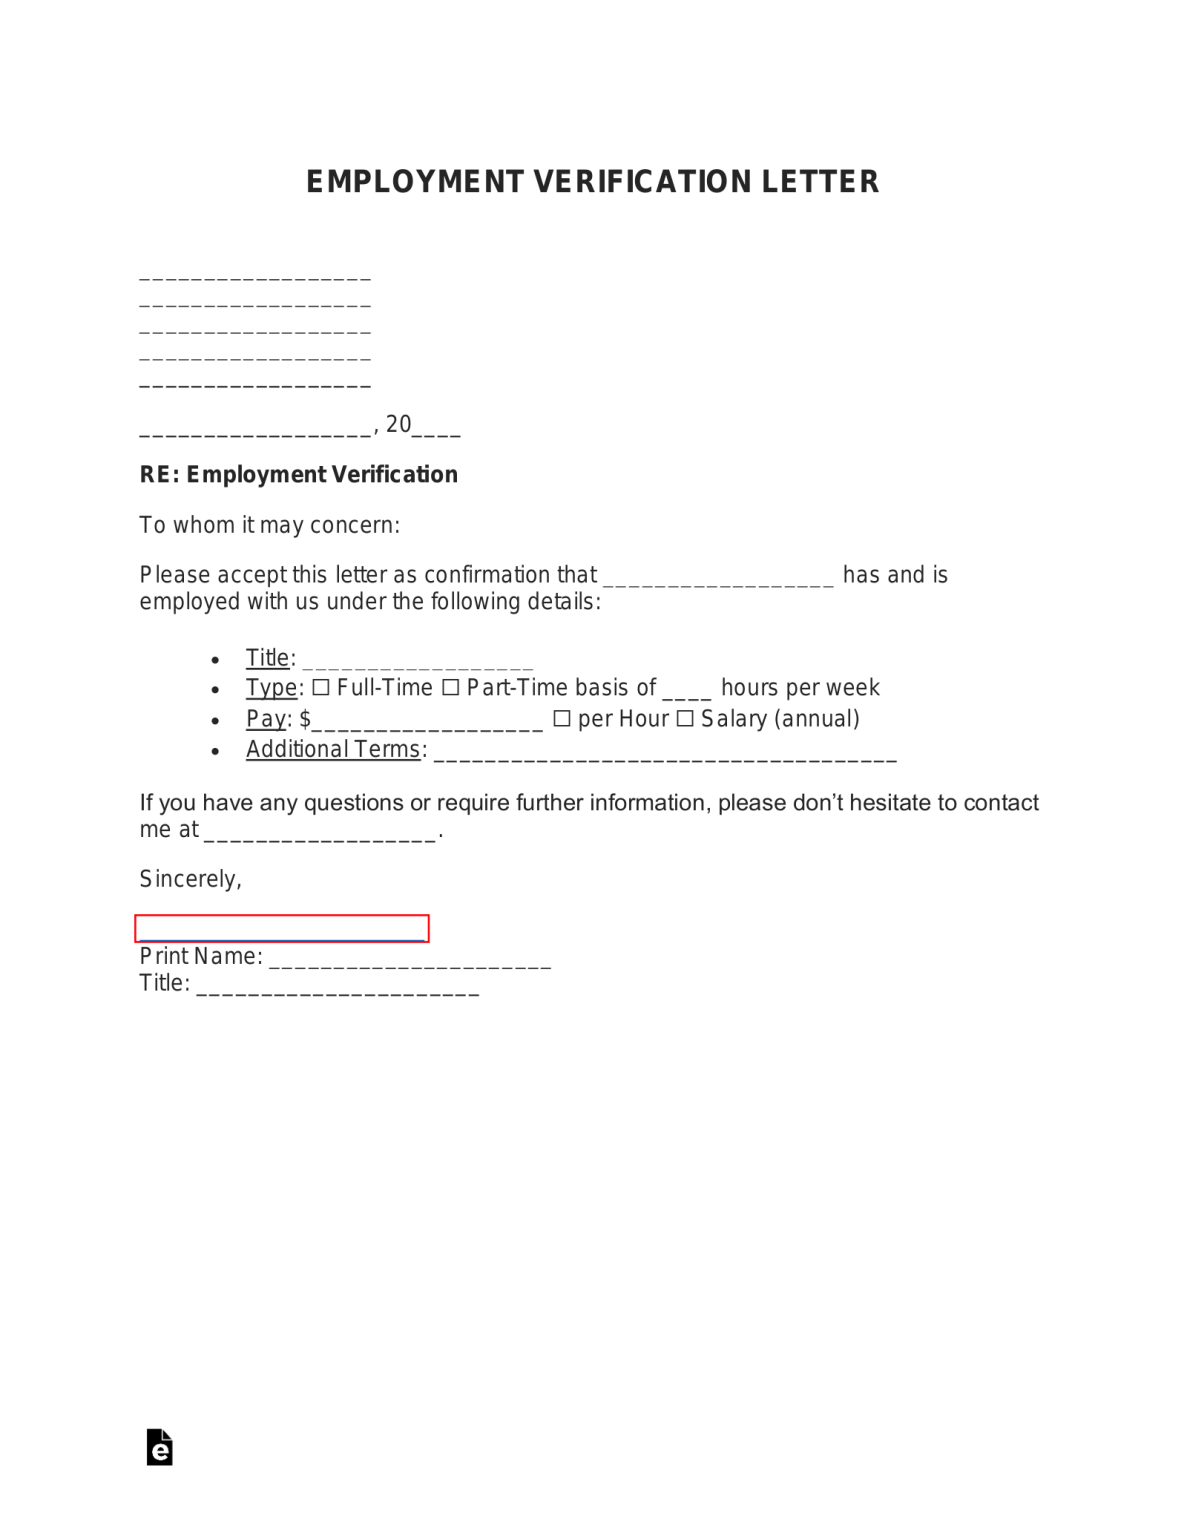 employment-verification-request-form-template-printable-printable